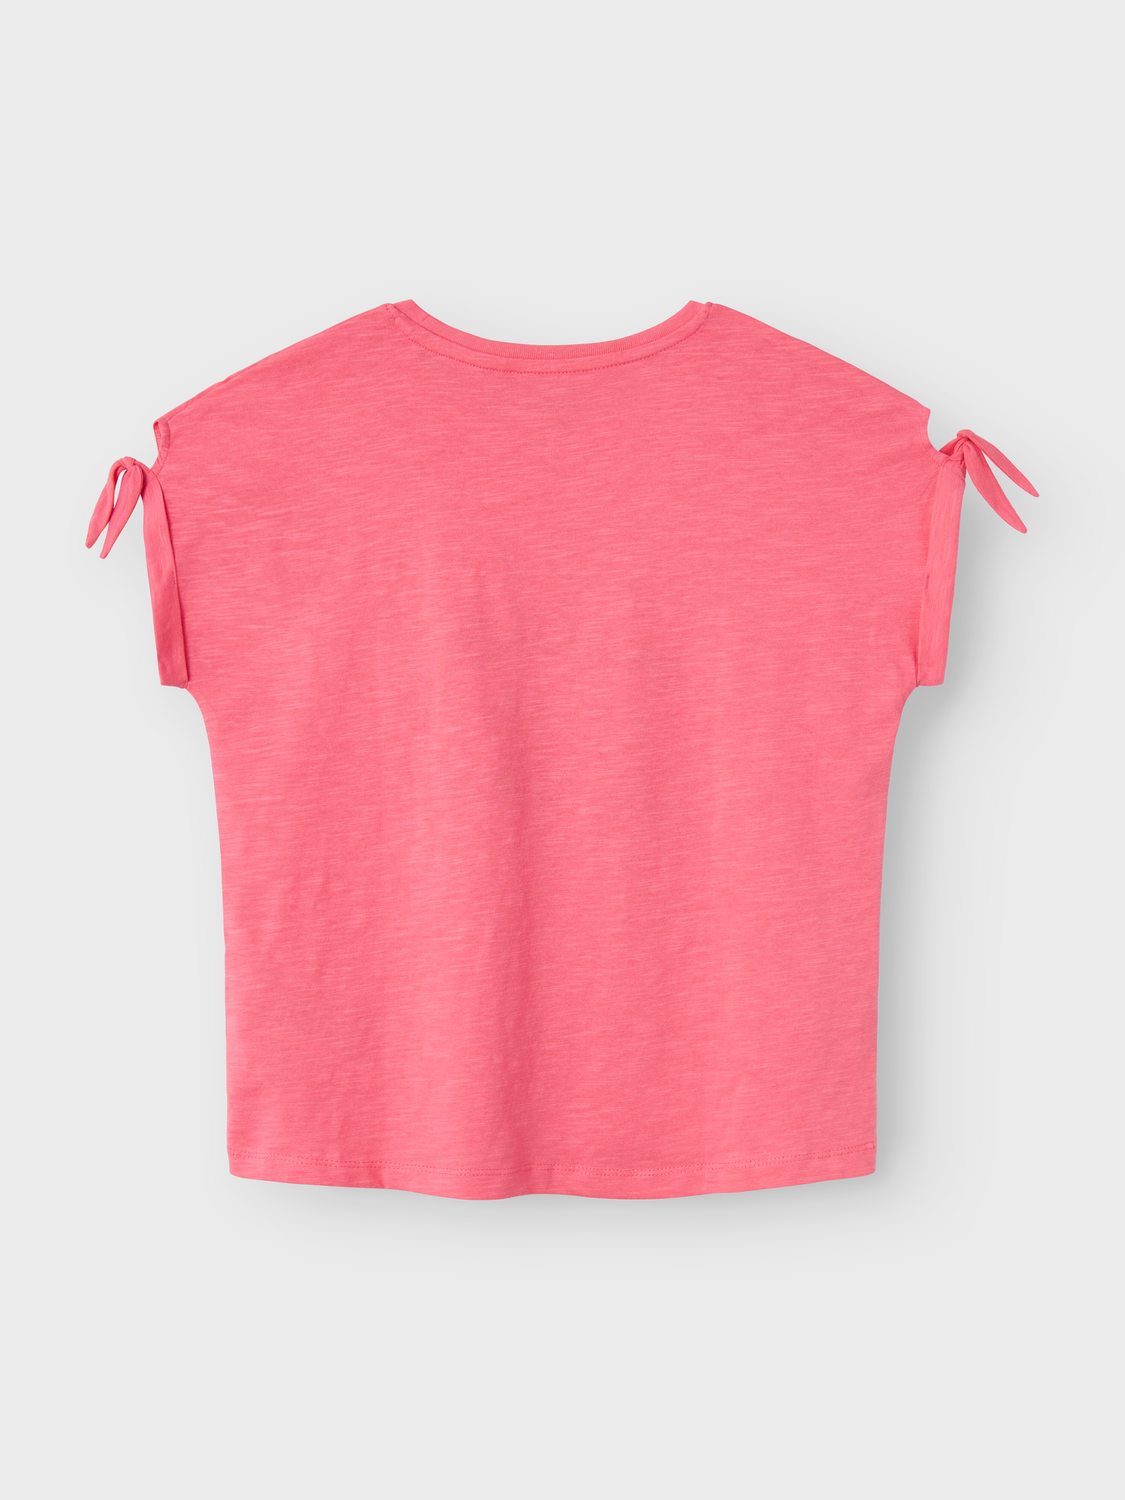 NKFVEET T-Shirts & Tops - Camellia Rose